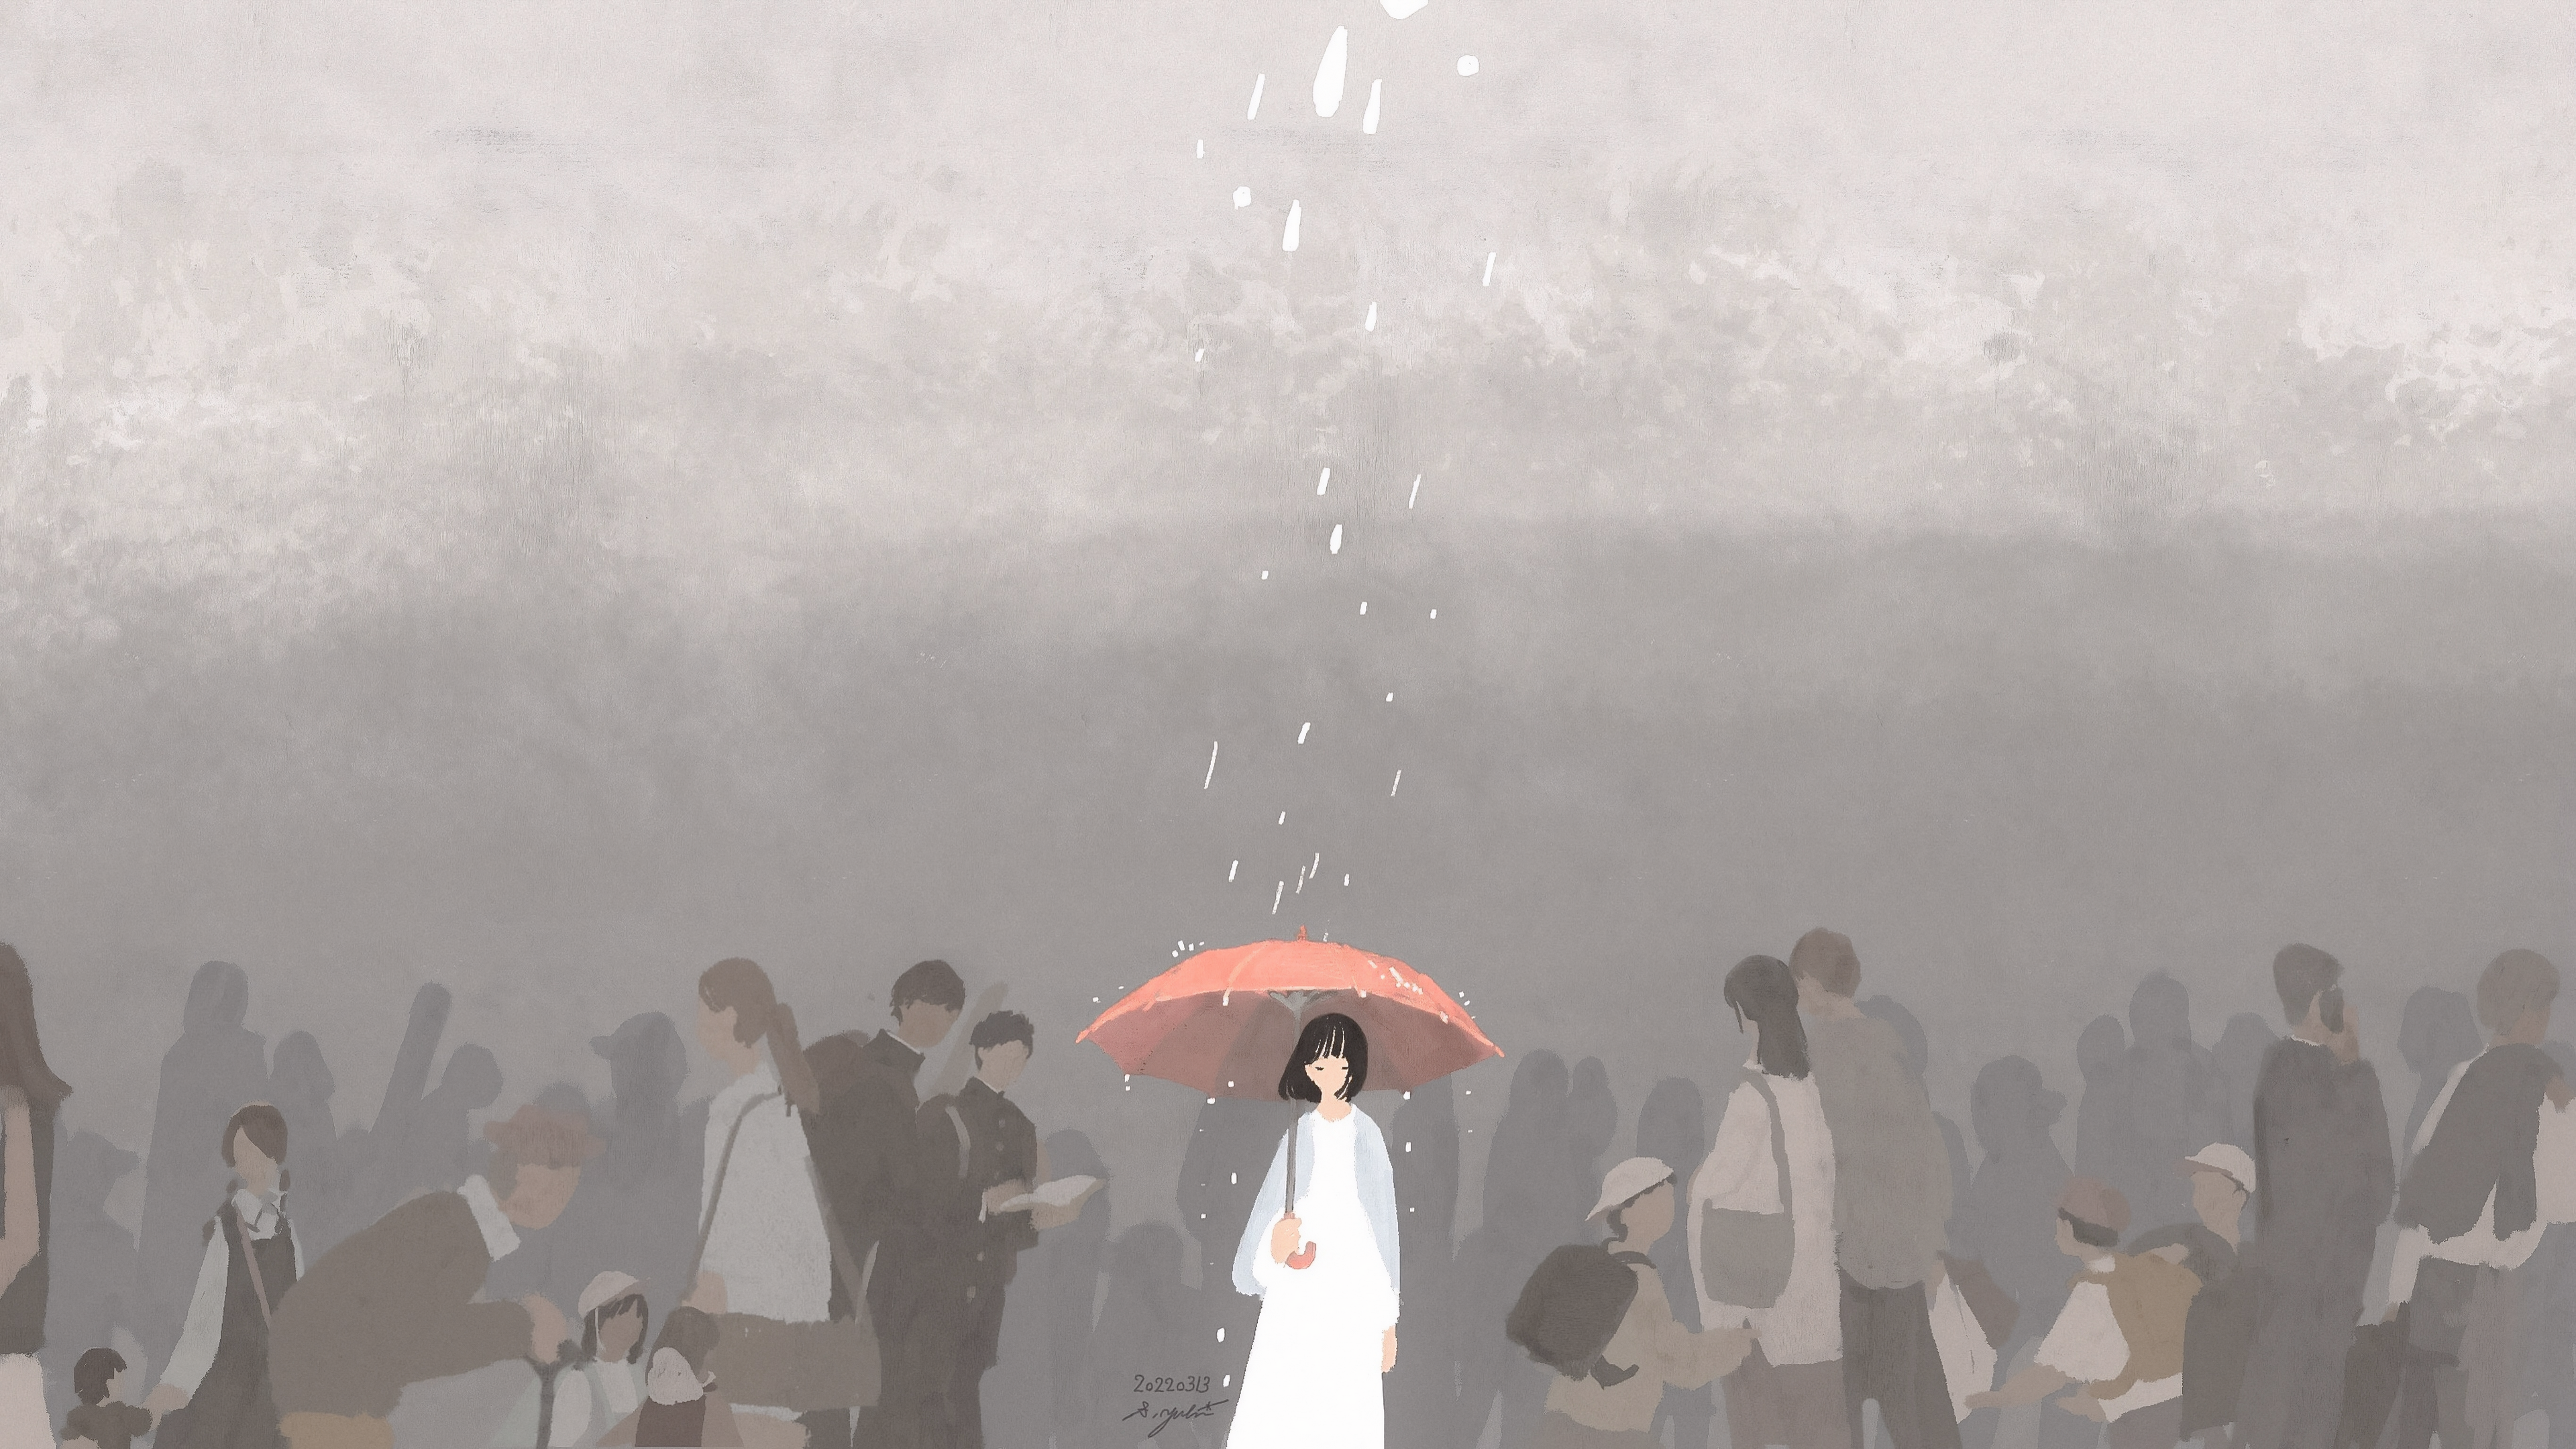 General 3840x2160 Satozaki Yuki rain umbrella digital art artwork loneliness gloomy